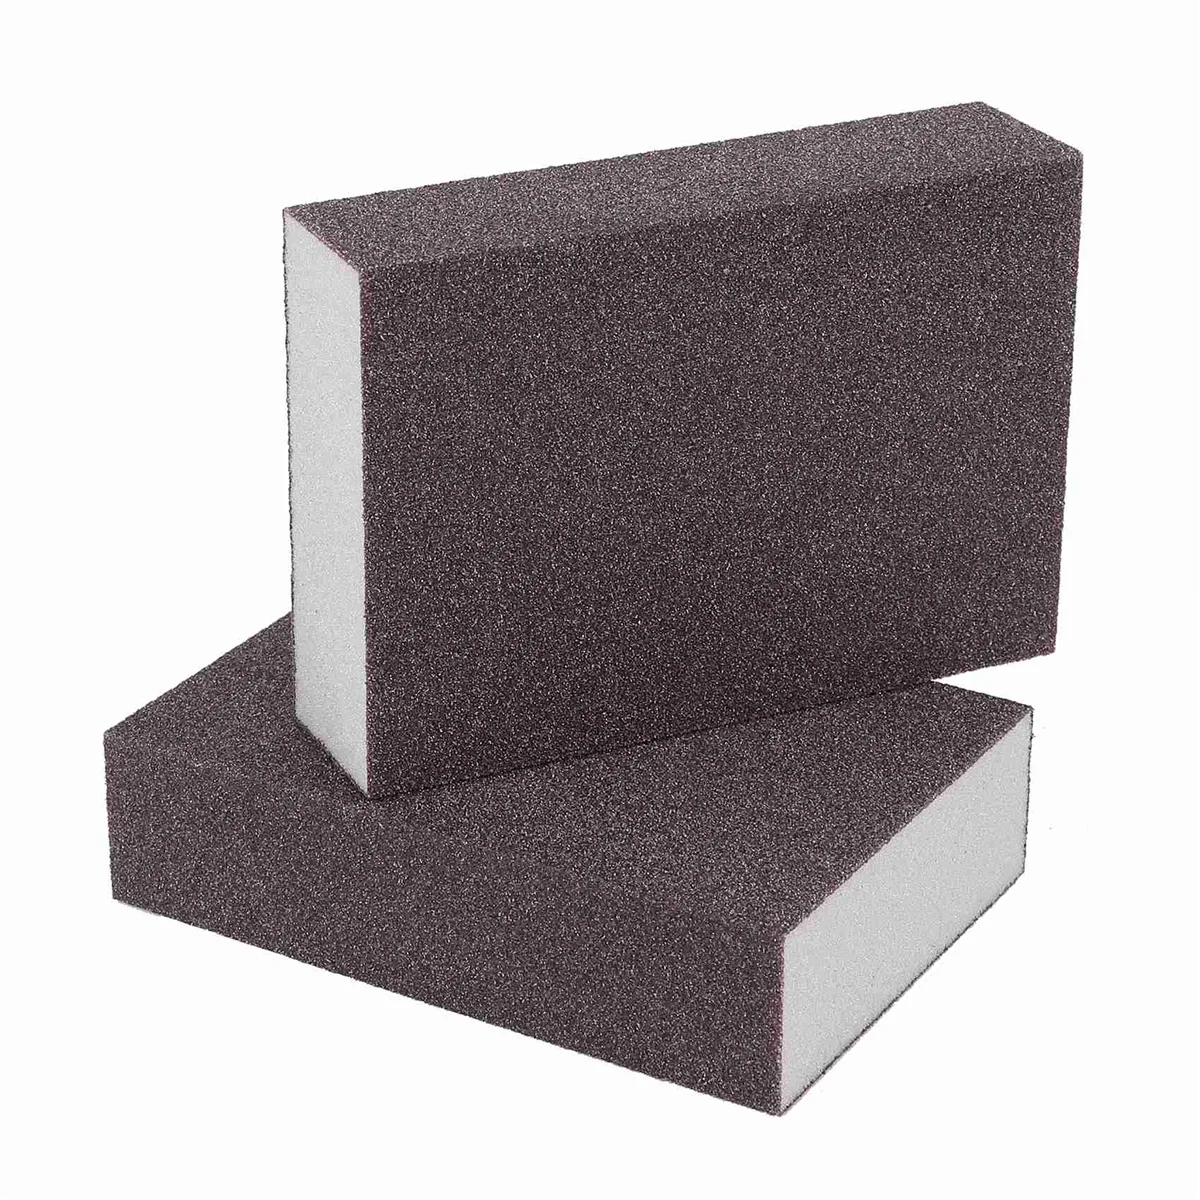 

8Pack Sanding Sponges Coarse Fine Sanding Blocks in 60-220 Grits Sand Foam Sandpaper for Metal Wood Polish